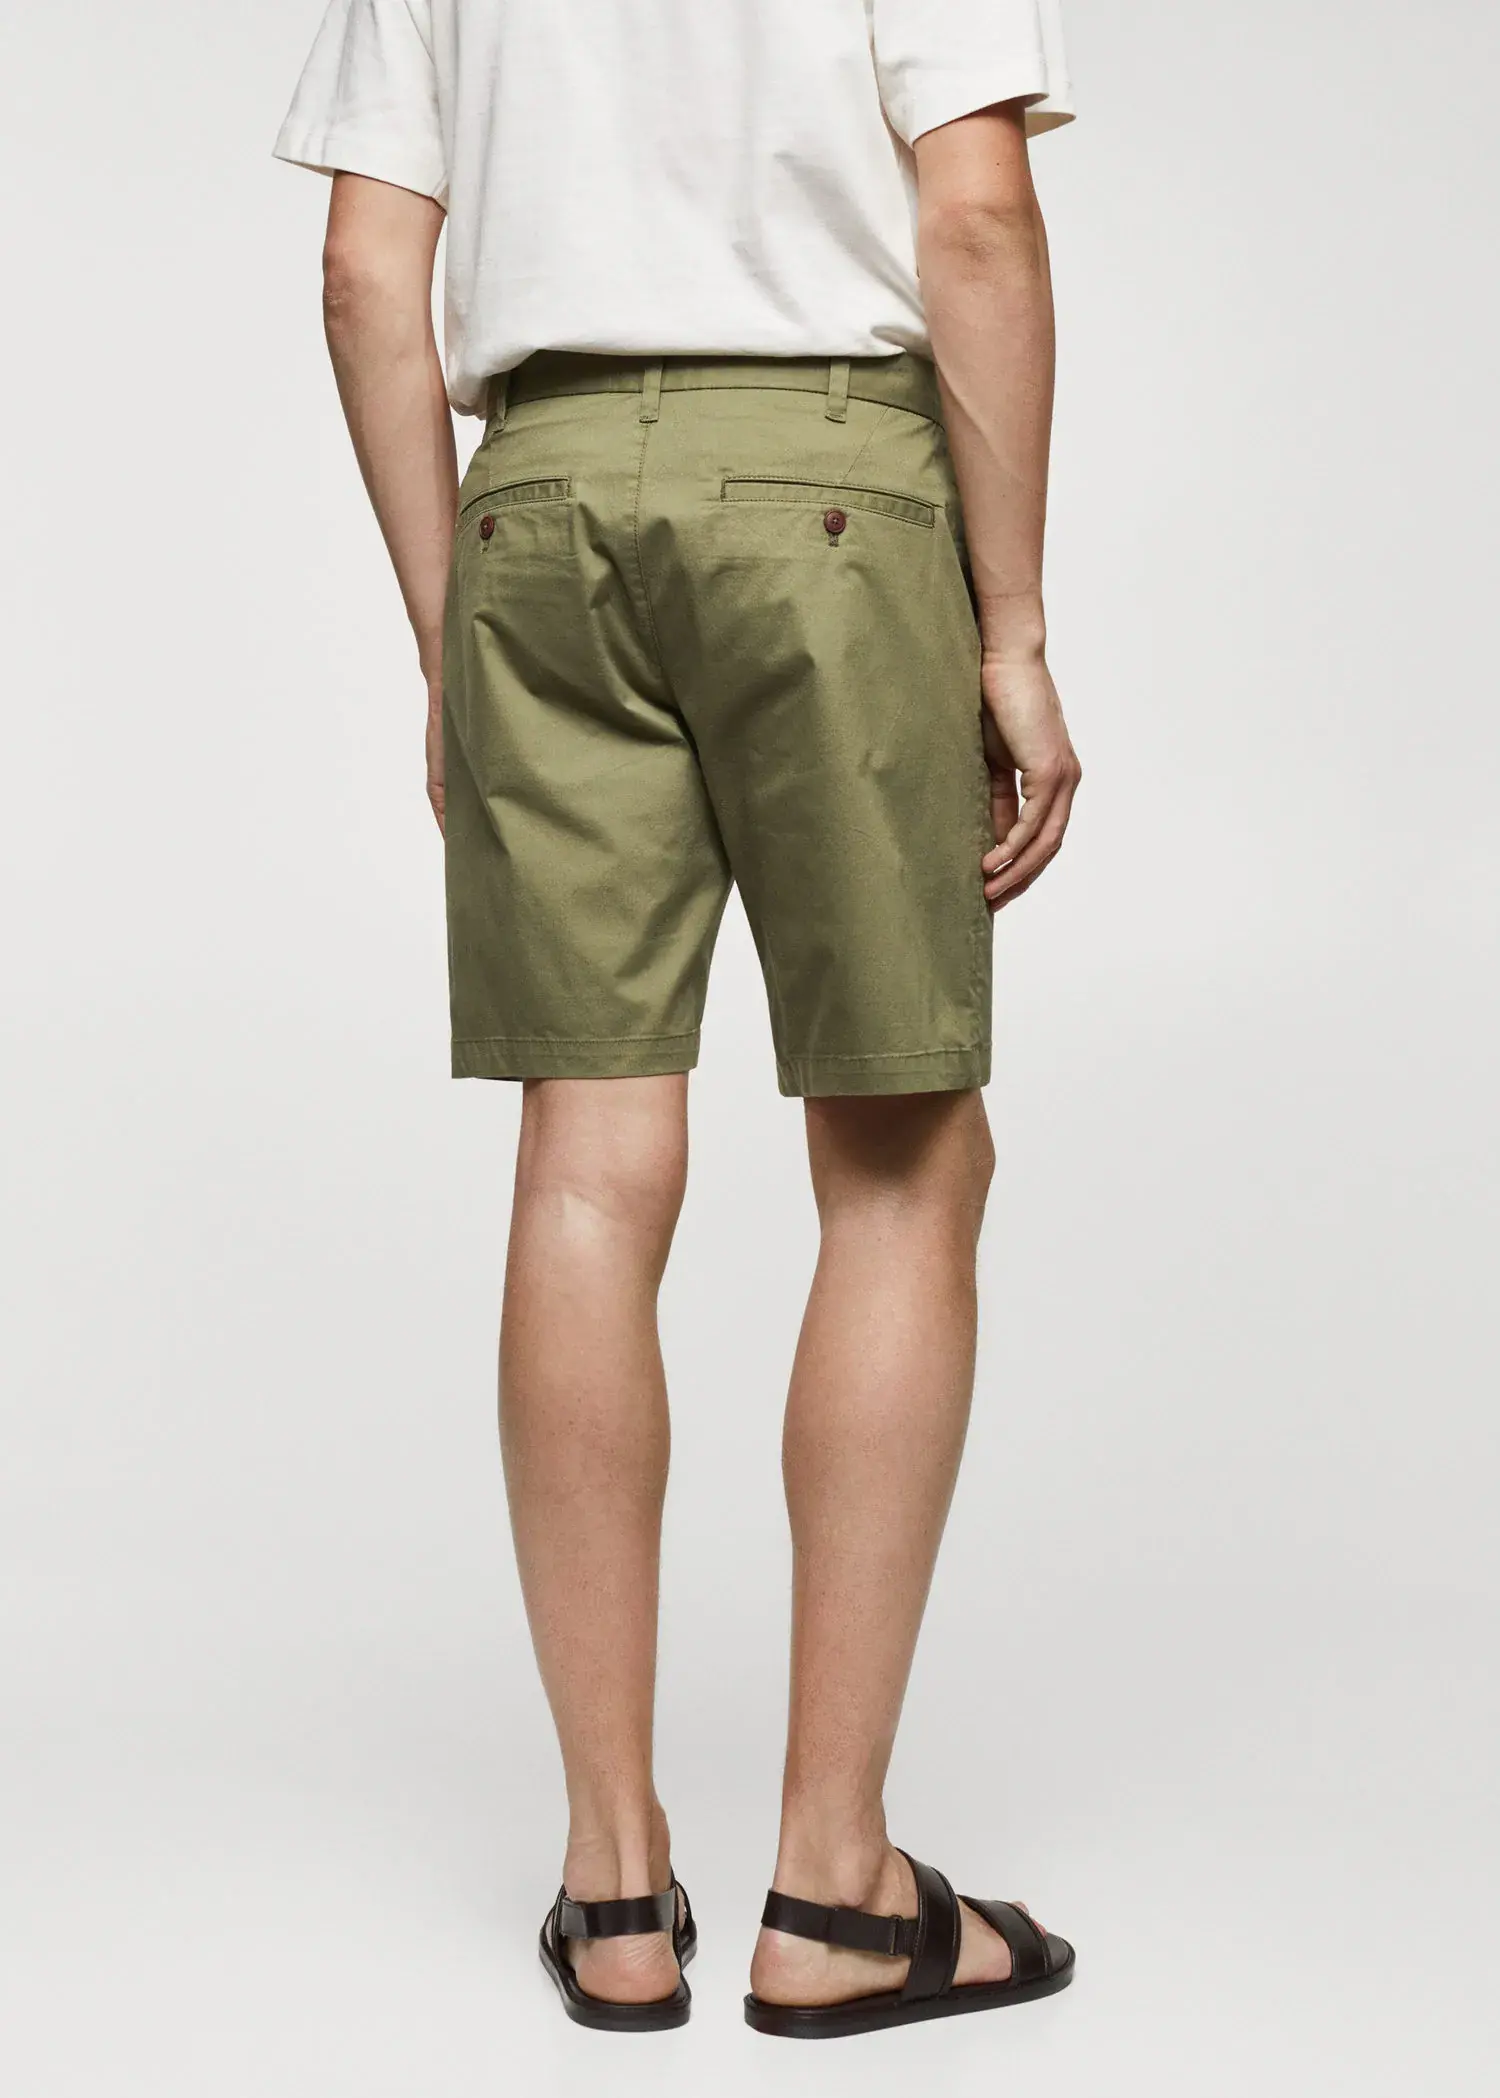 Mango Slim fit chino cotton Bermuda shorts. 3